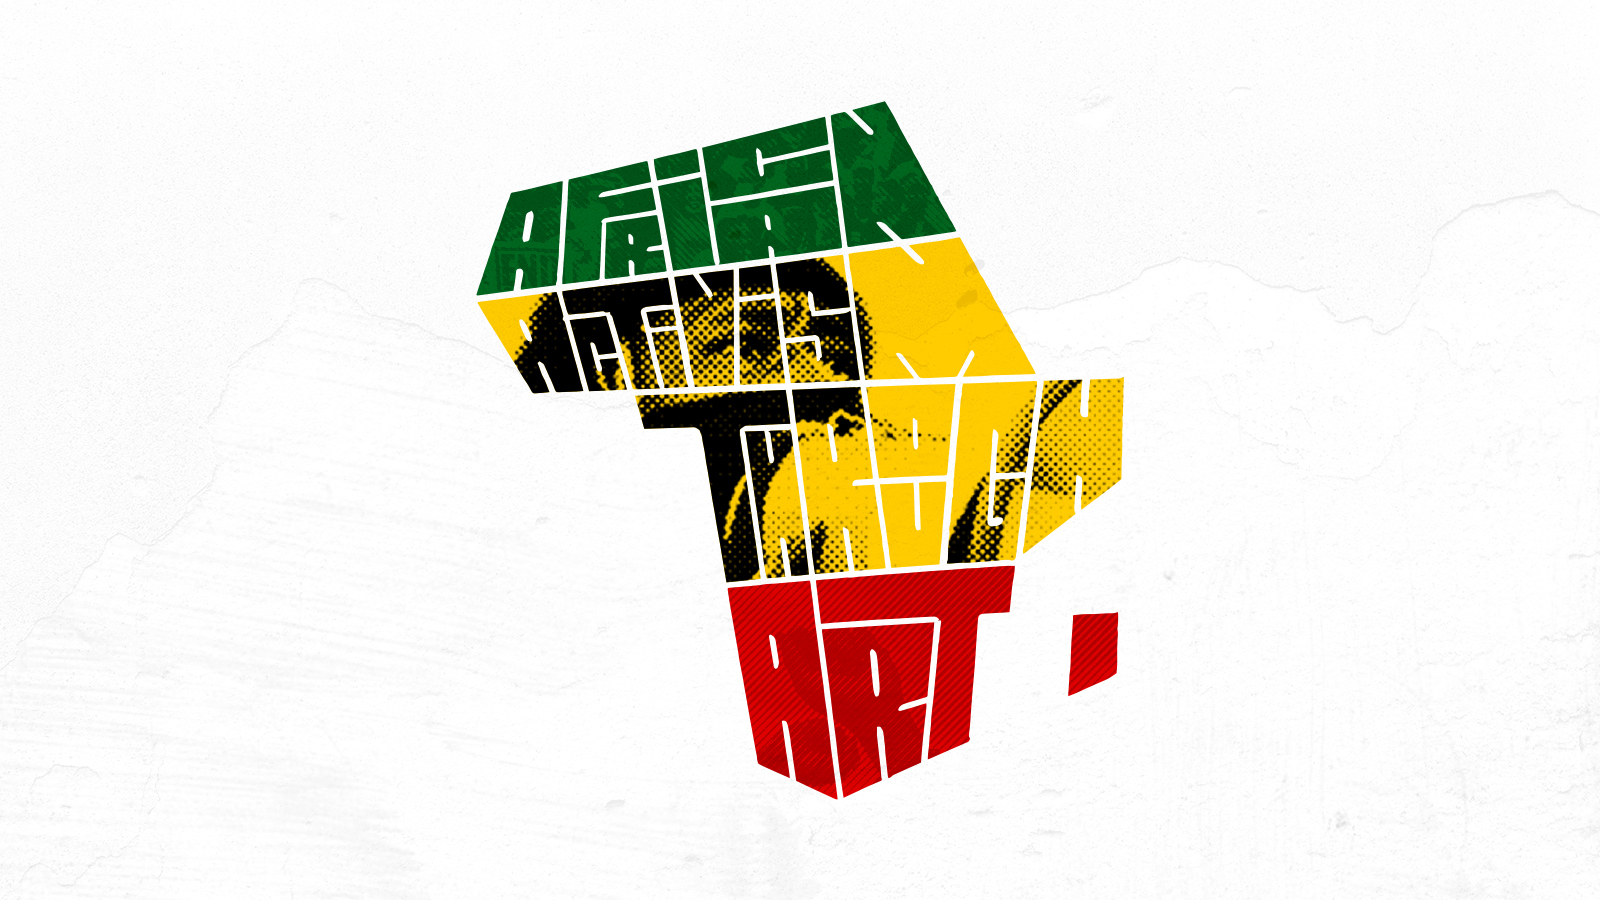 African Activism Through Art